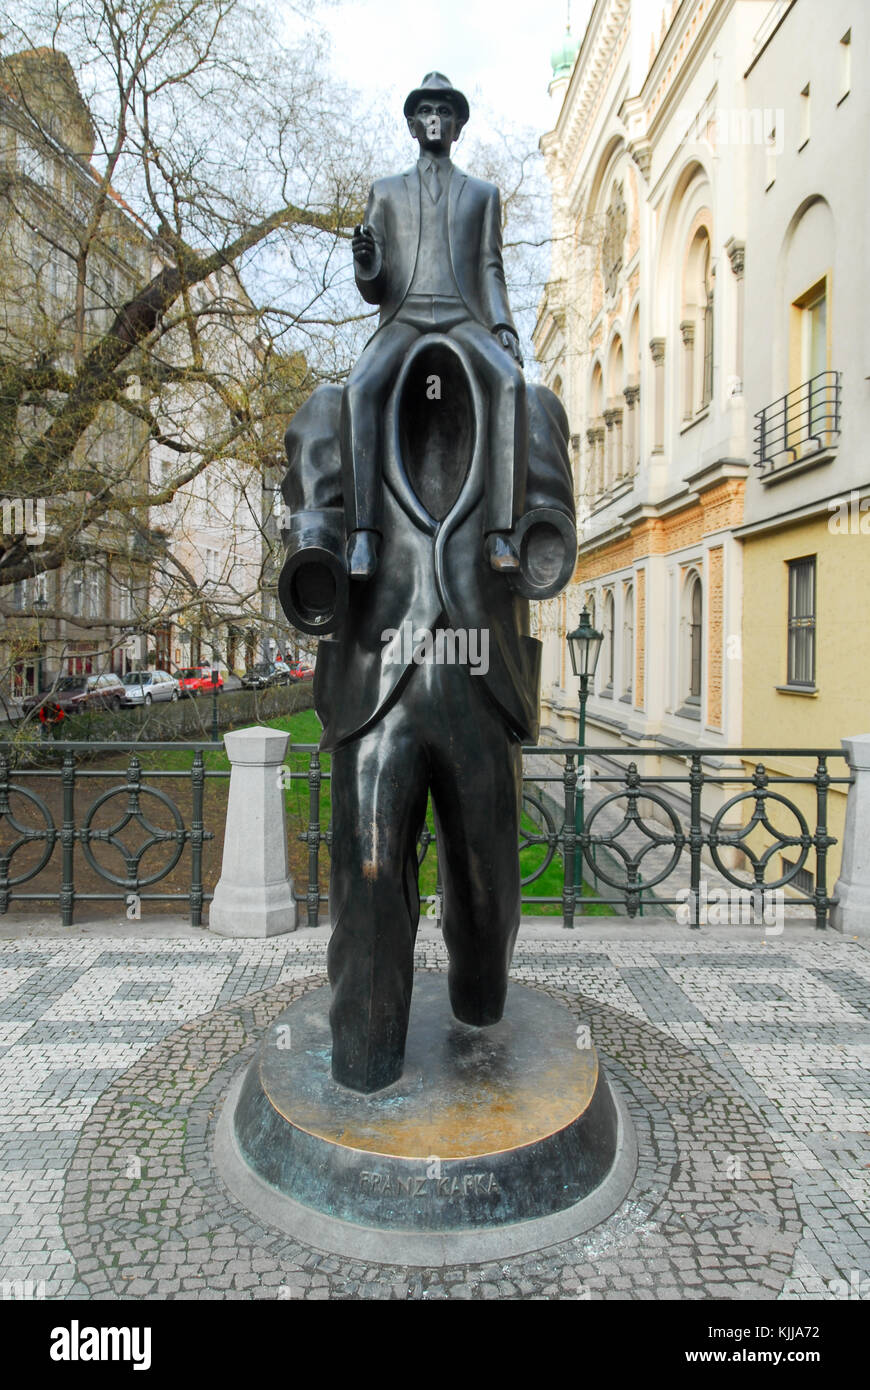 PRAGUE, CZECH REPUBLIC - JANUARY 10, 2007: Franz Kafka statue located in Jewish quarter of Prague, Czech Republic. Kafka was a German language writer  Stock Photo